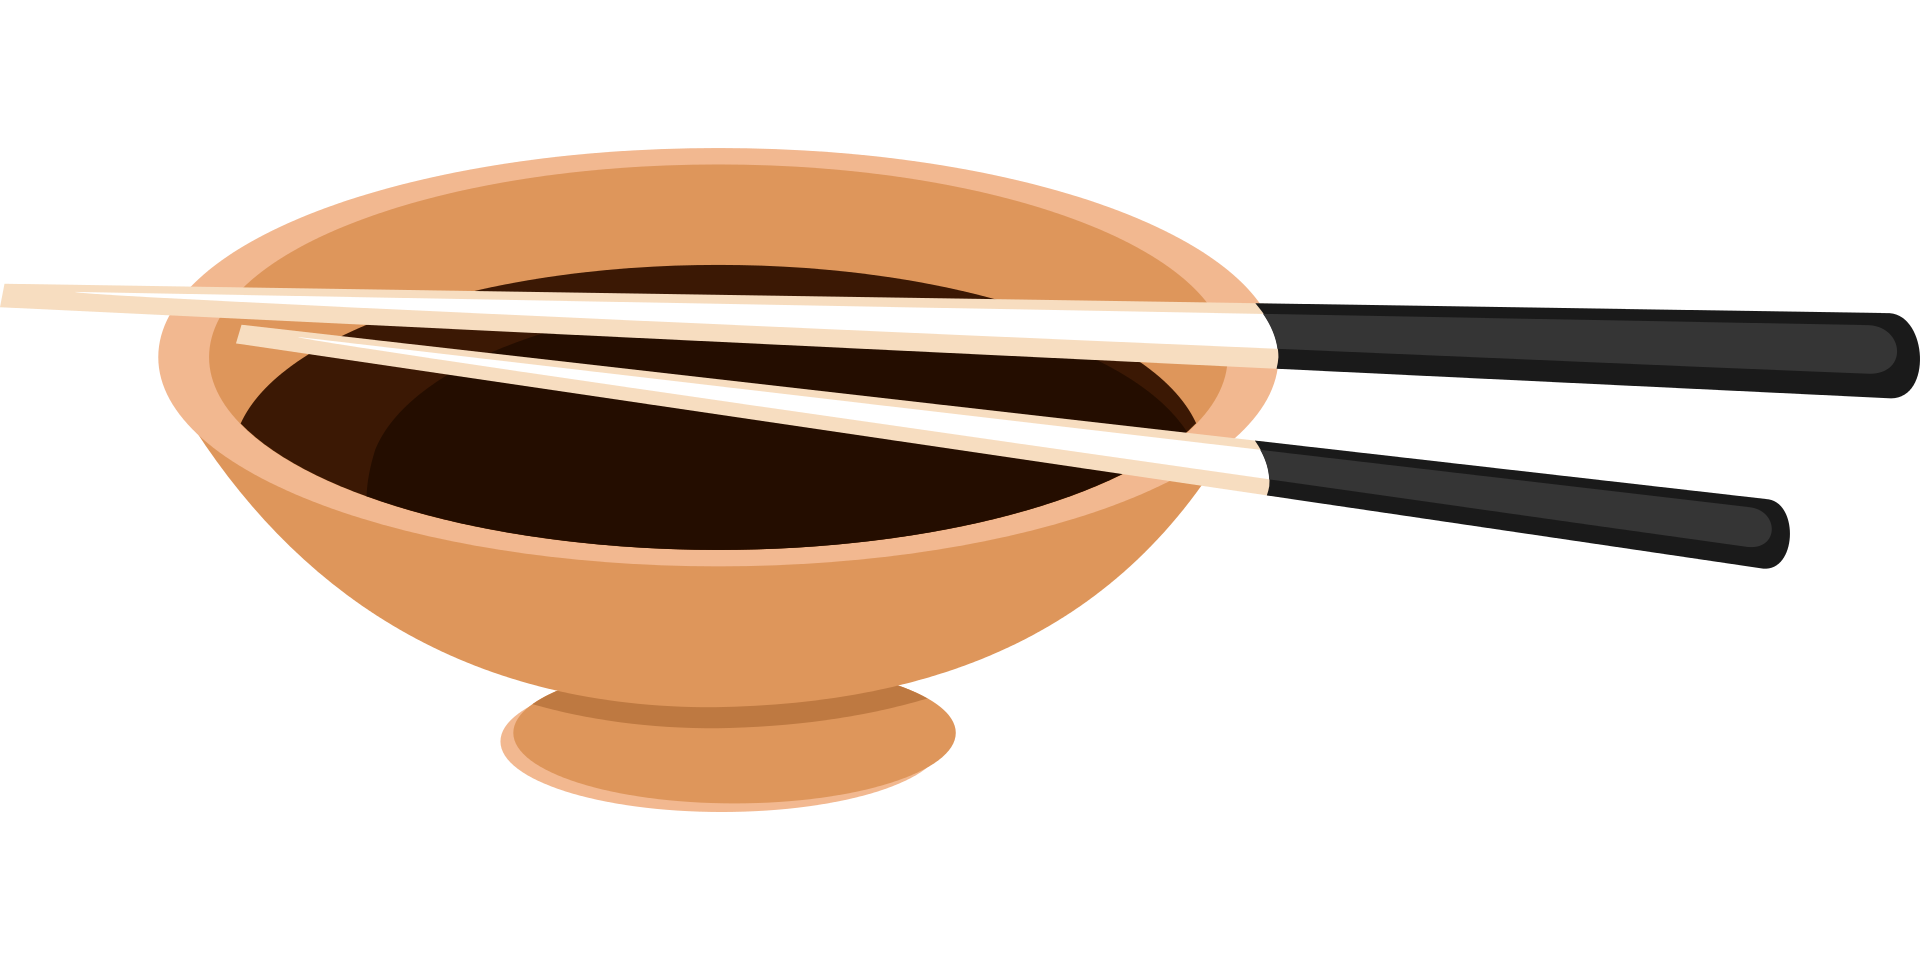 Chopsticks on a Bowl